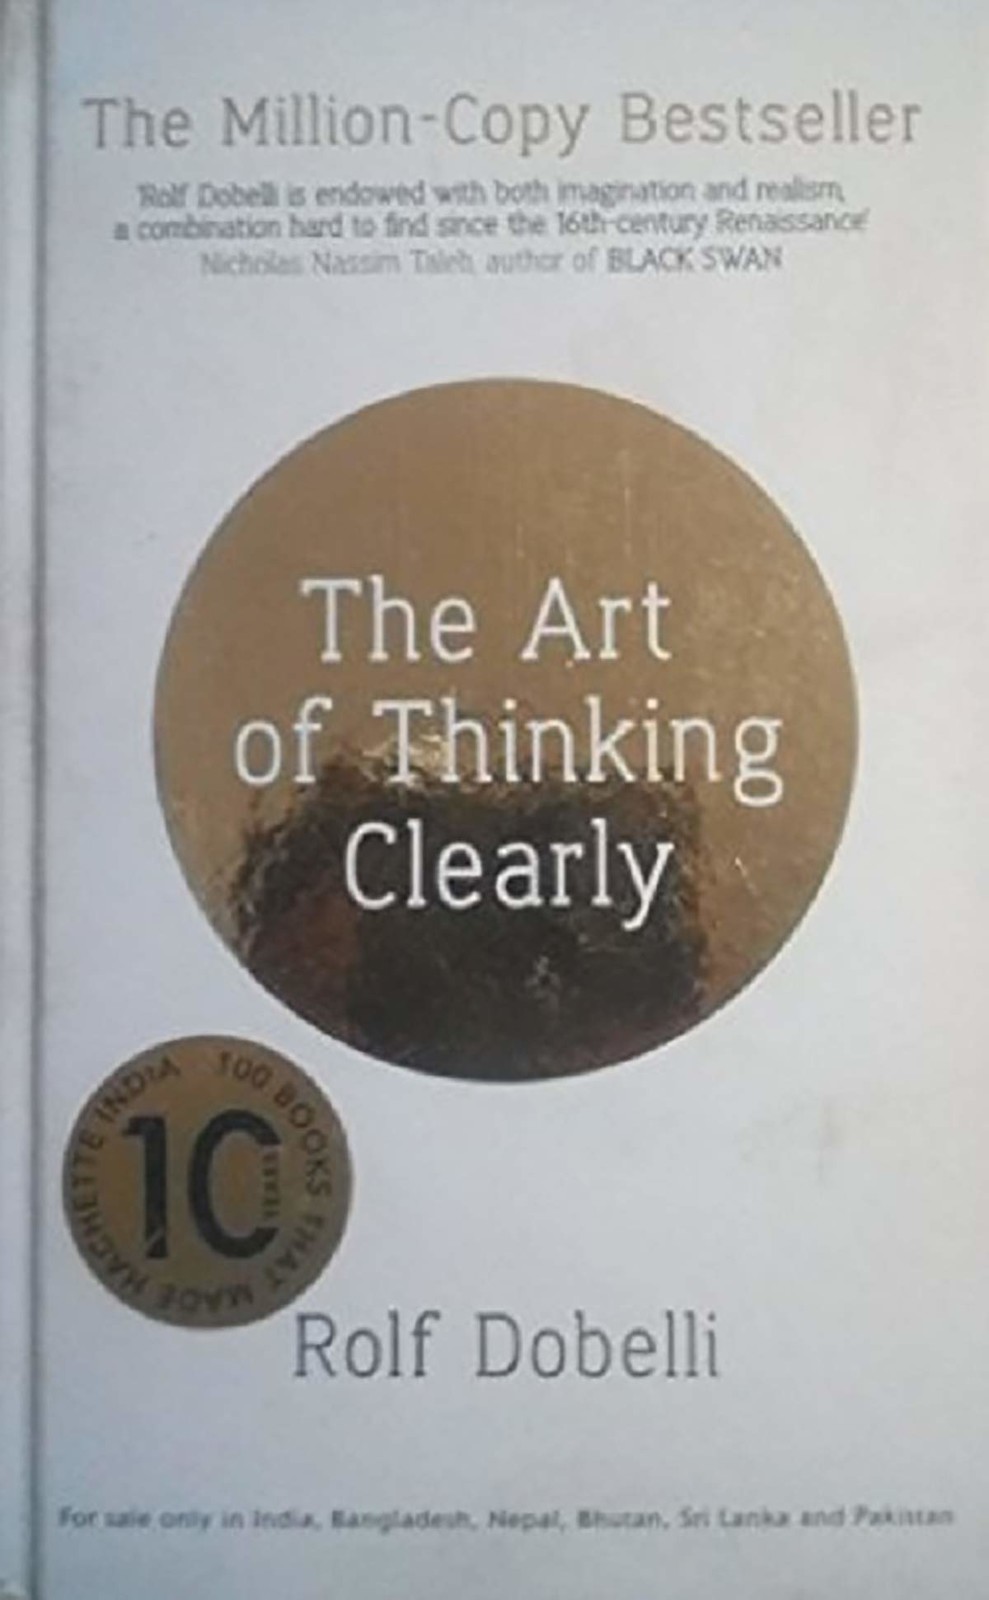 2- فن التفكير بوضوح (The Art of Thinking Clearly)